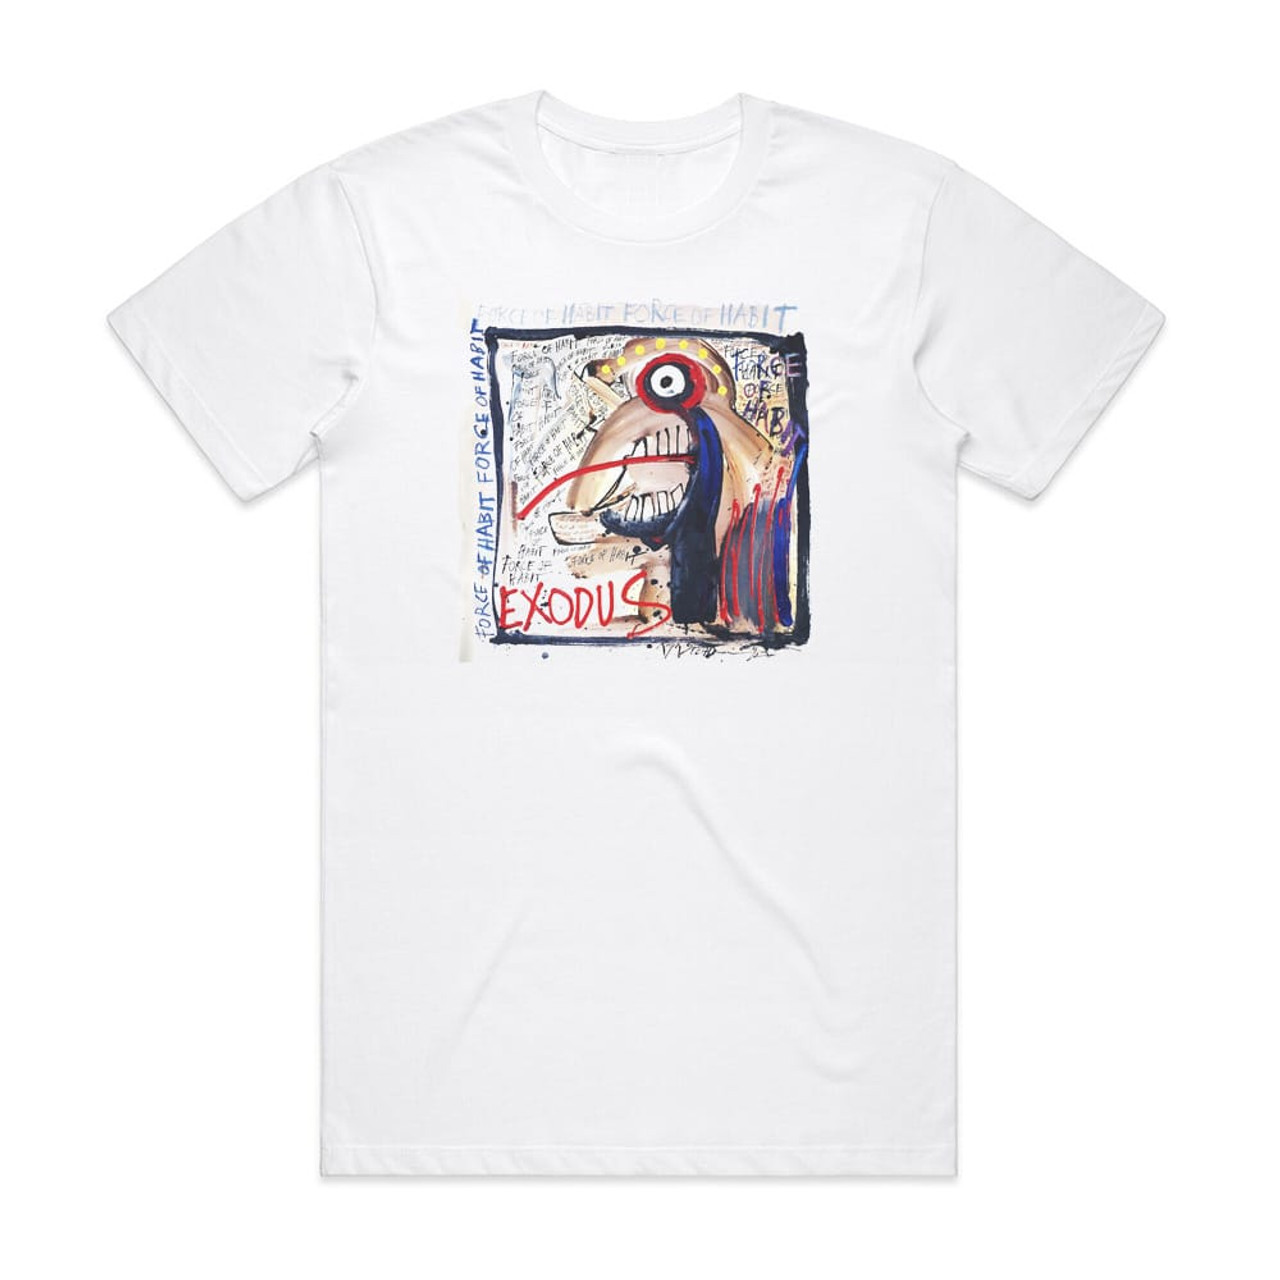 Exodus Force Of Habit 1 Album Cover T-Shirt White